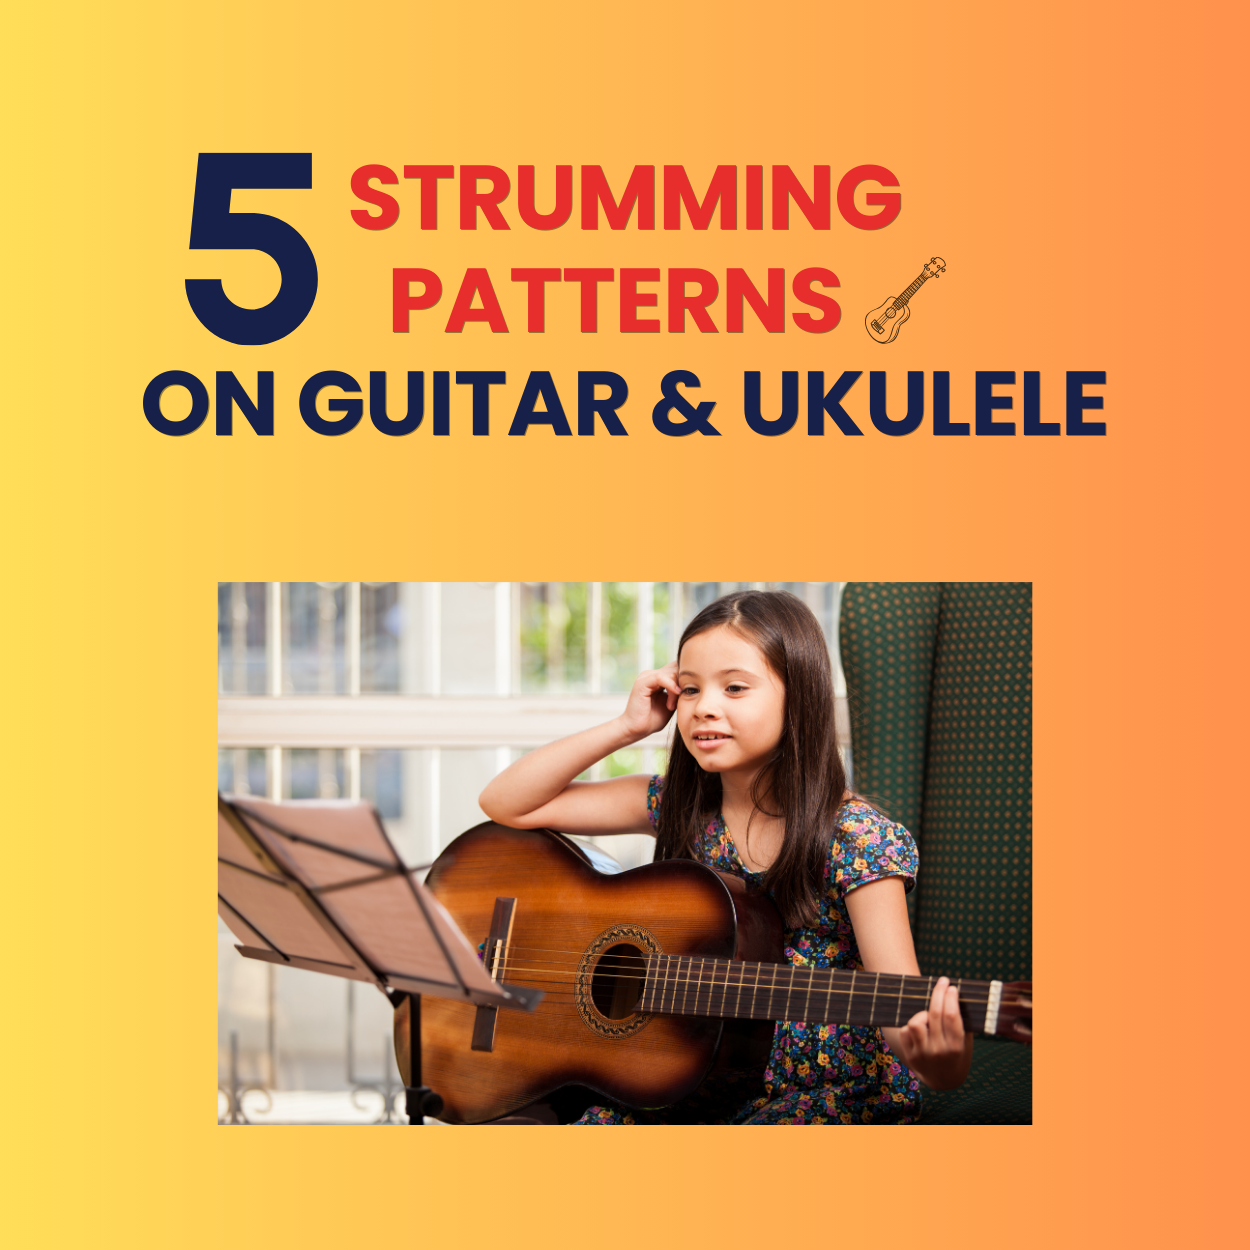 5 Beginner-level Strumming Patterns for Guitar and Ukulele Players